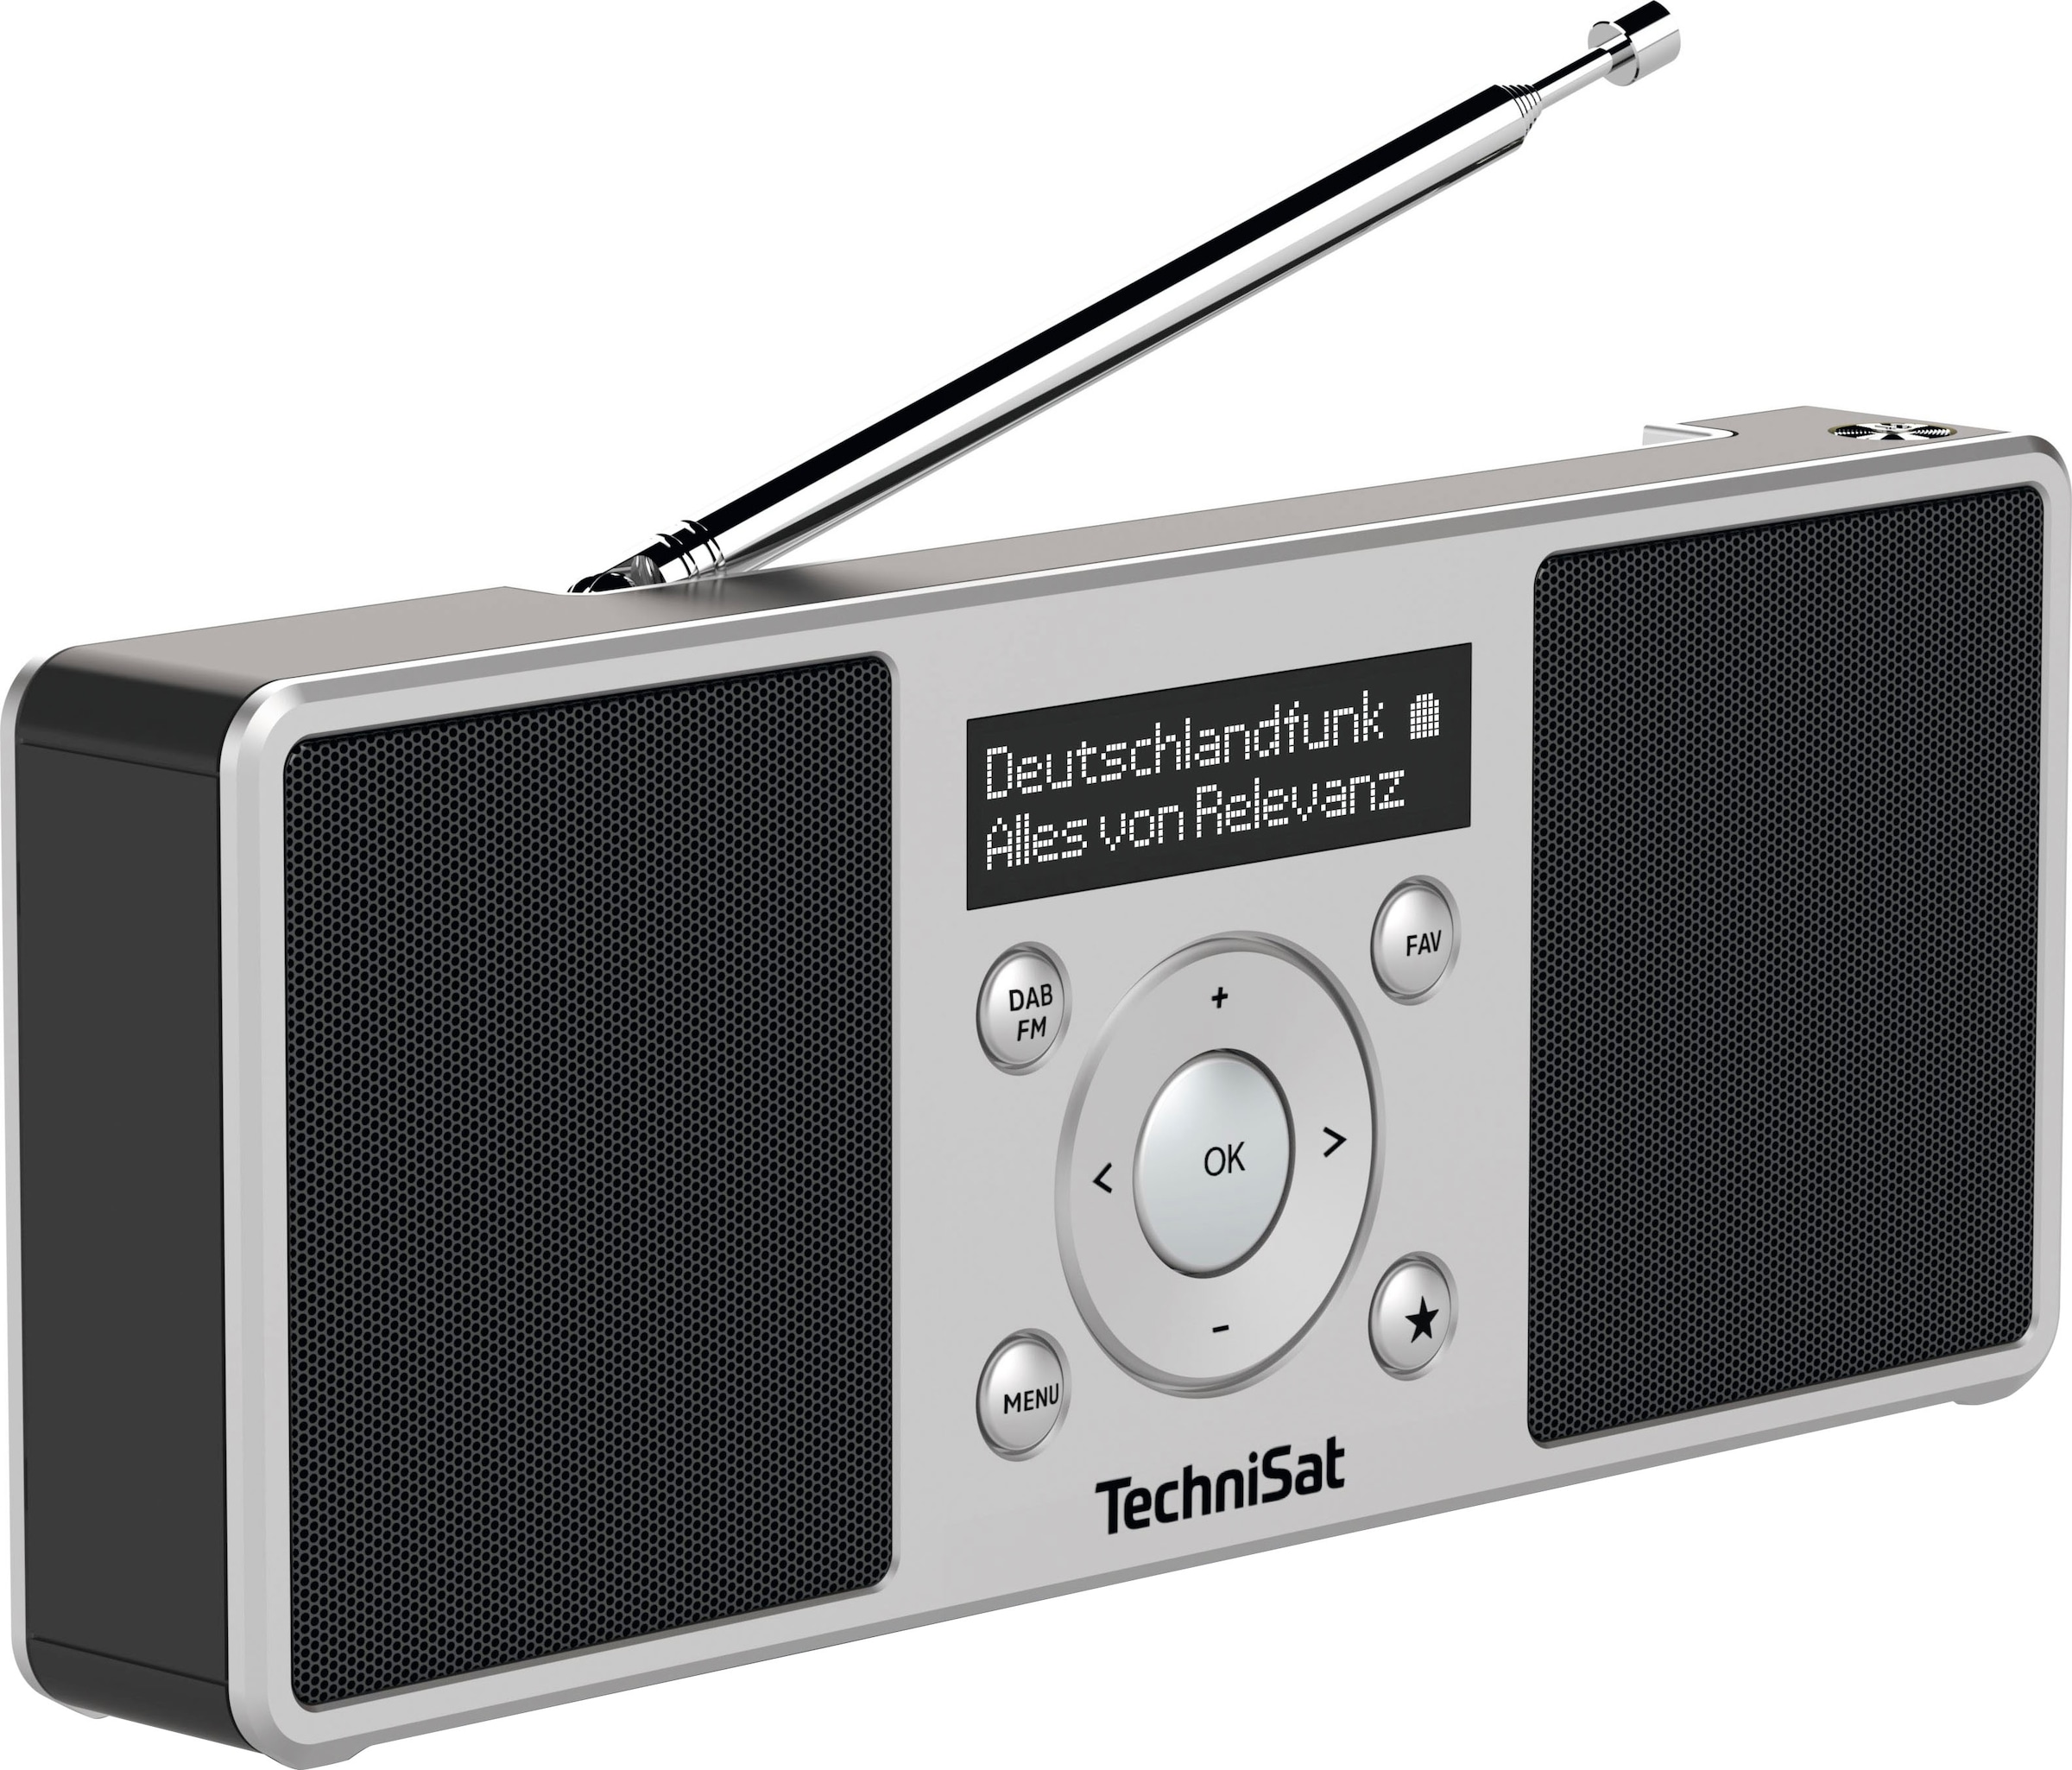 TechniSat Digitalradio (DAB+) im Germany (Digitalradio 1 W), Shop OTTO (DAB+)-UKW jetzt S«, Online »DIGITRADIO in 2 RDS Made mit